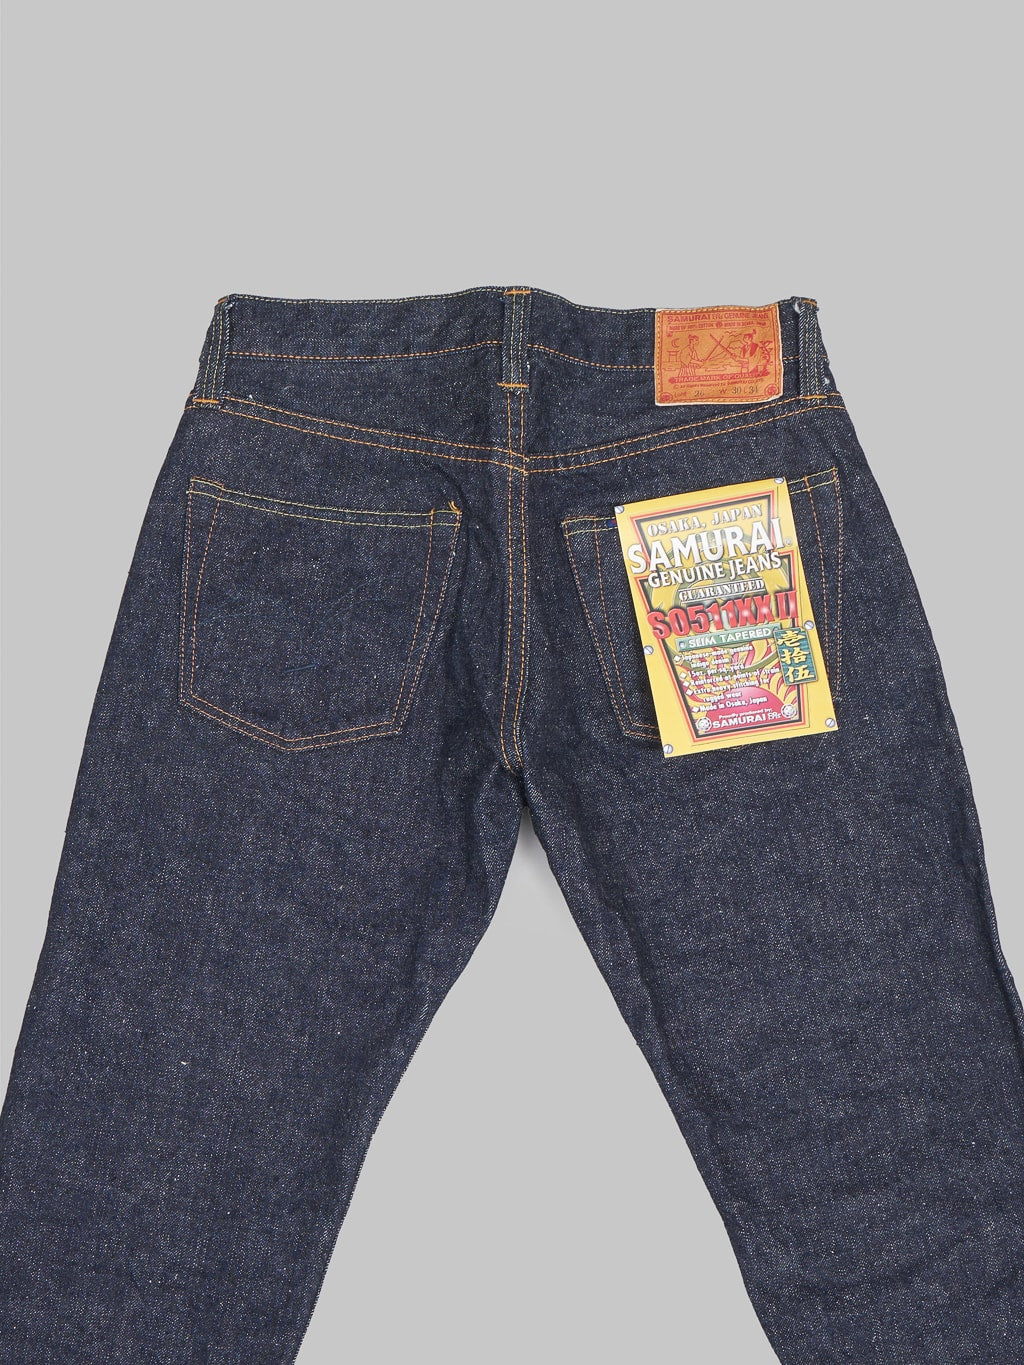 Samurai Jeans S0511XXII "Texas Cotton" 15oz Slim Tapered Jeans